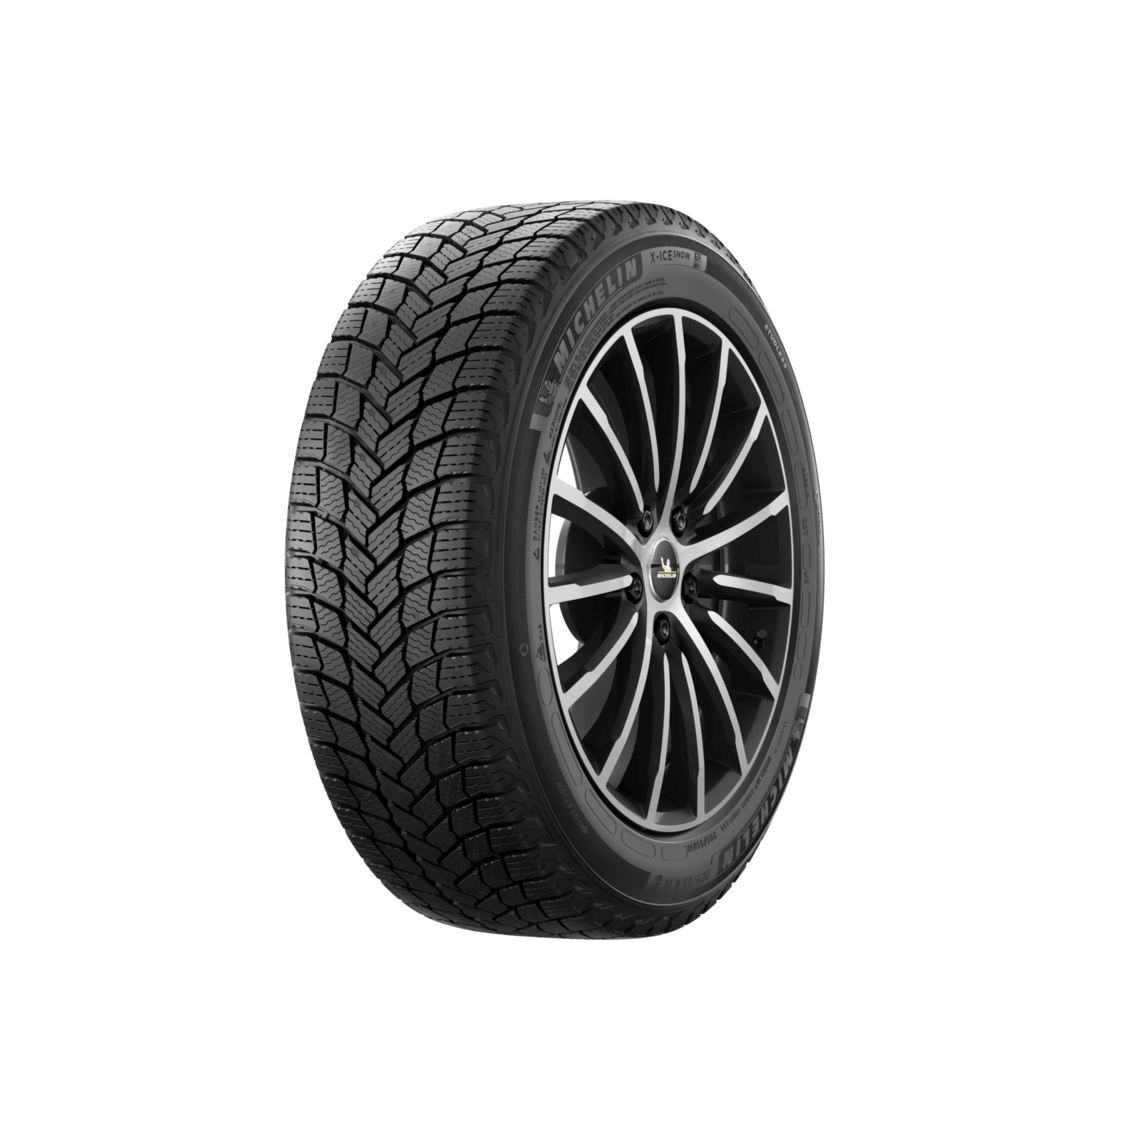 Gomme Nuove Michelin 235/60 R18 107T X-ICE SNOW SUV M+S pneumatici nuovi Invernale